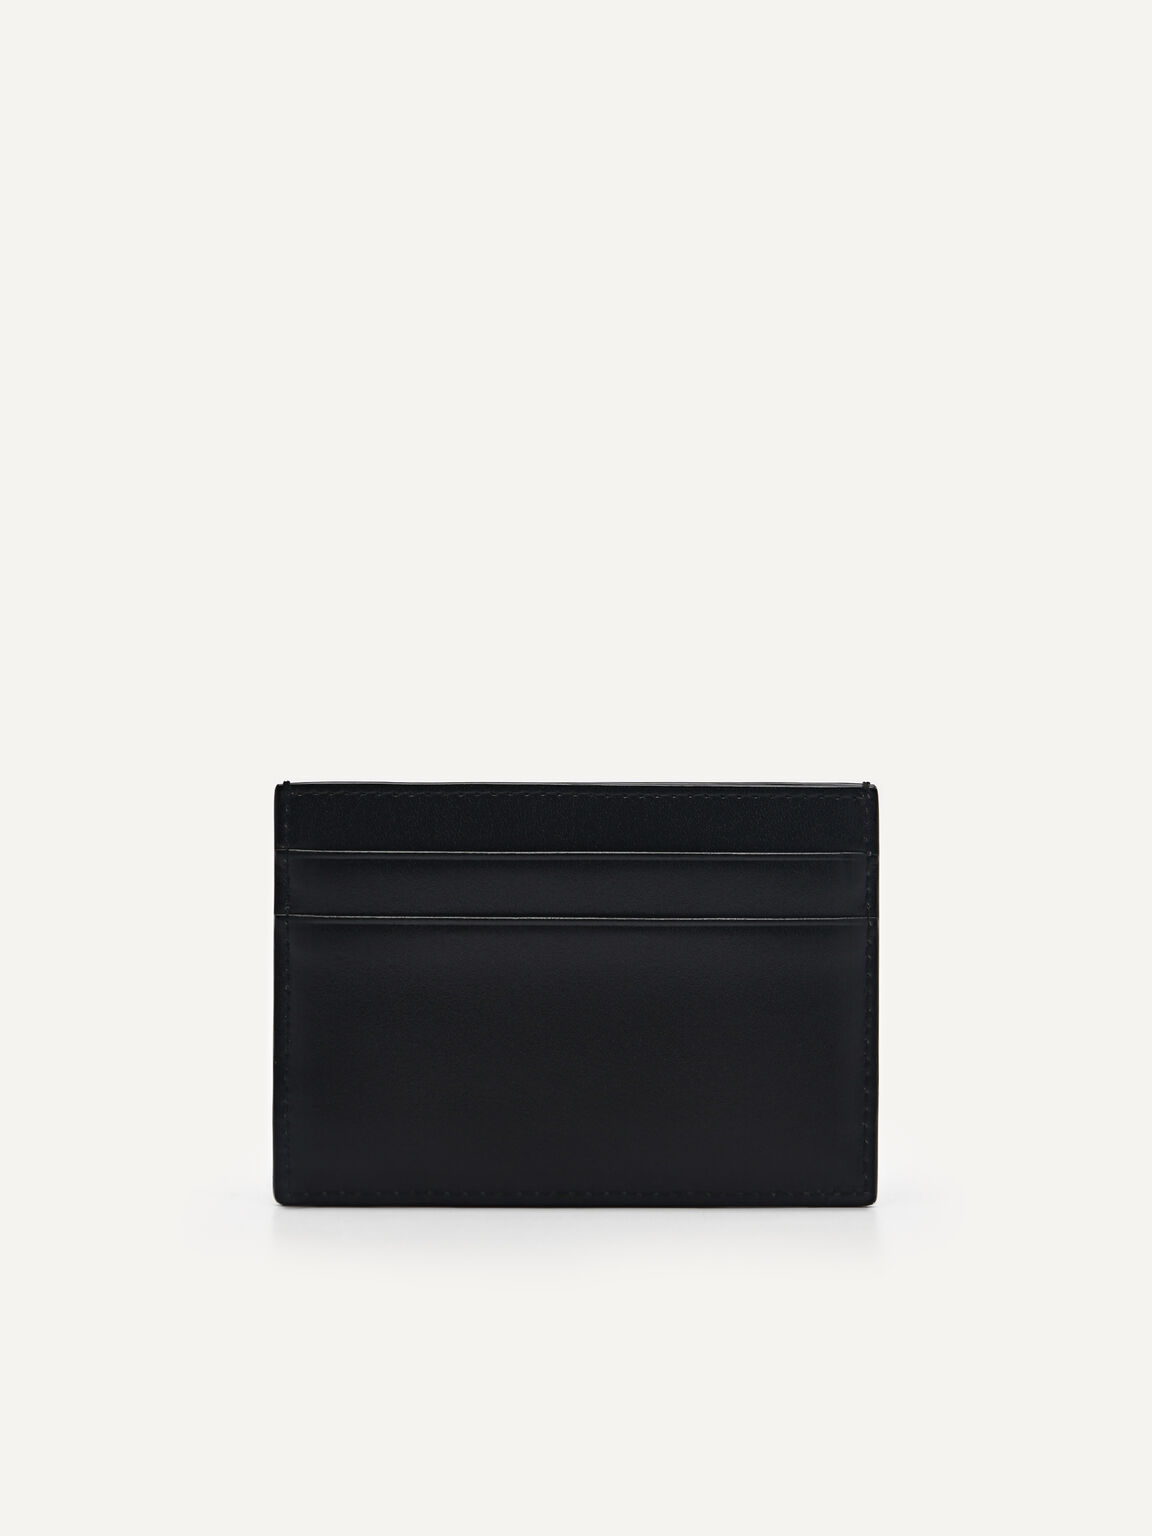 PEDRO Studio Leather Card Holder, Black